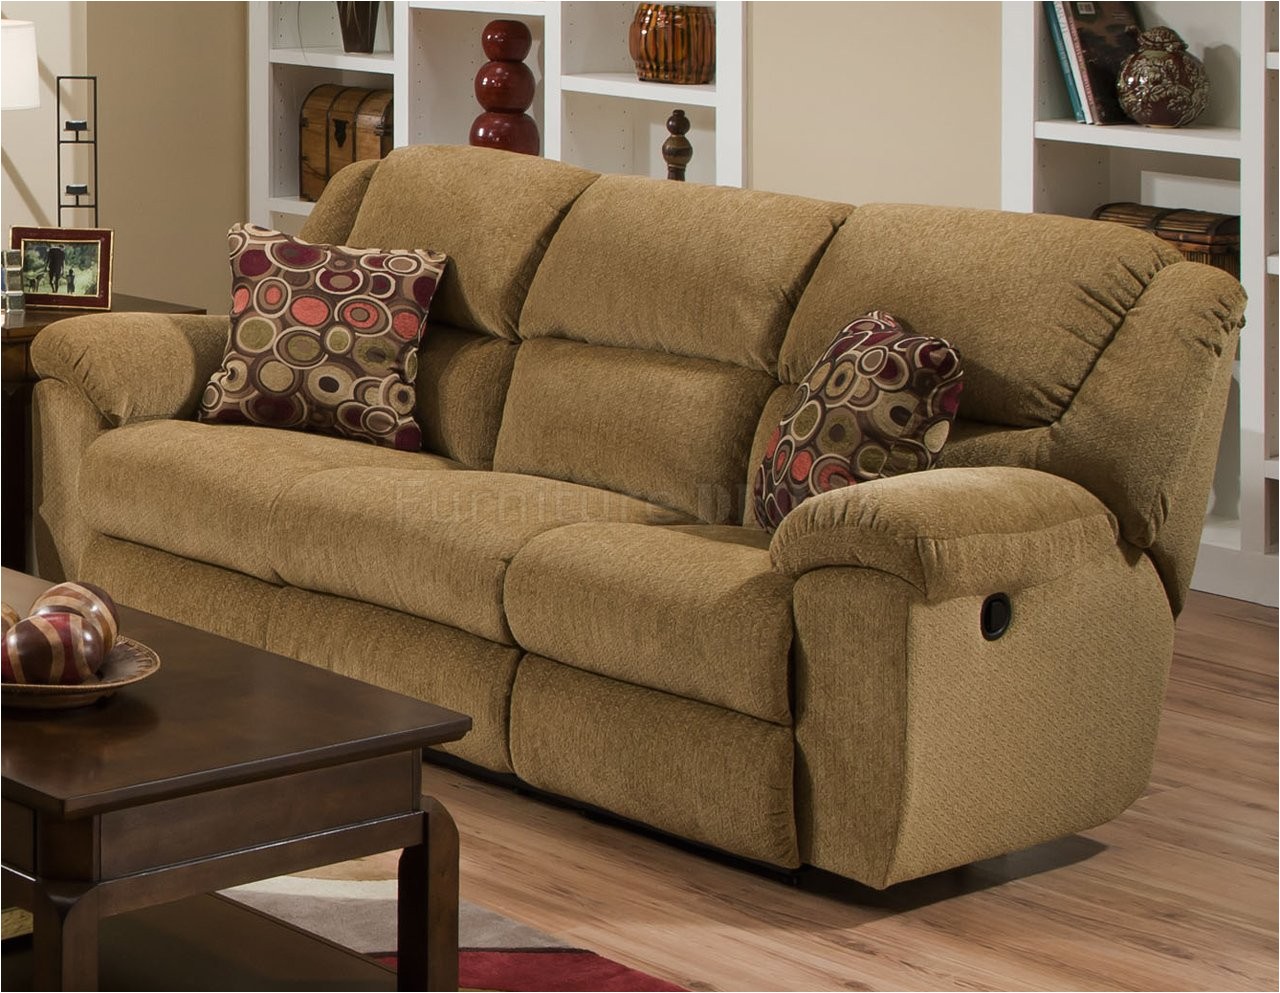 Double Reclining sofa Slipcover Recliner sofa Slipcovers Walmart Three Seat Stretch Elastic sofa